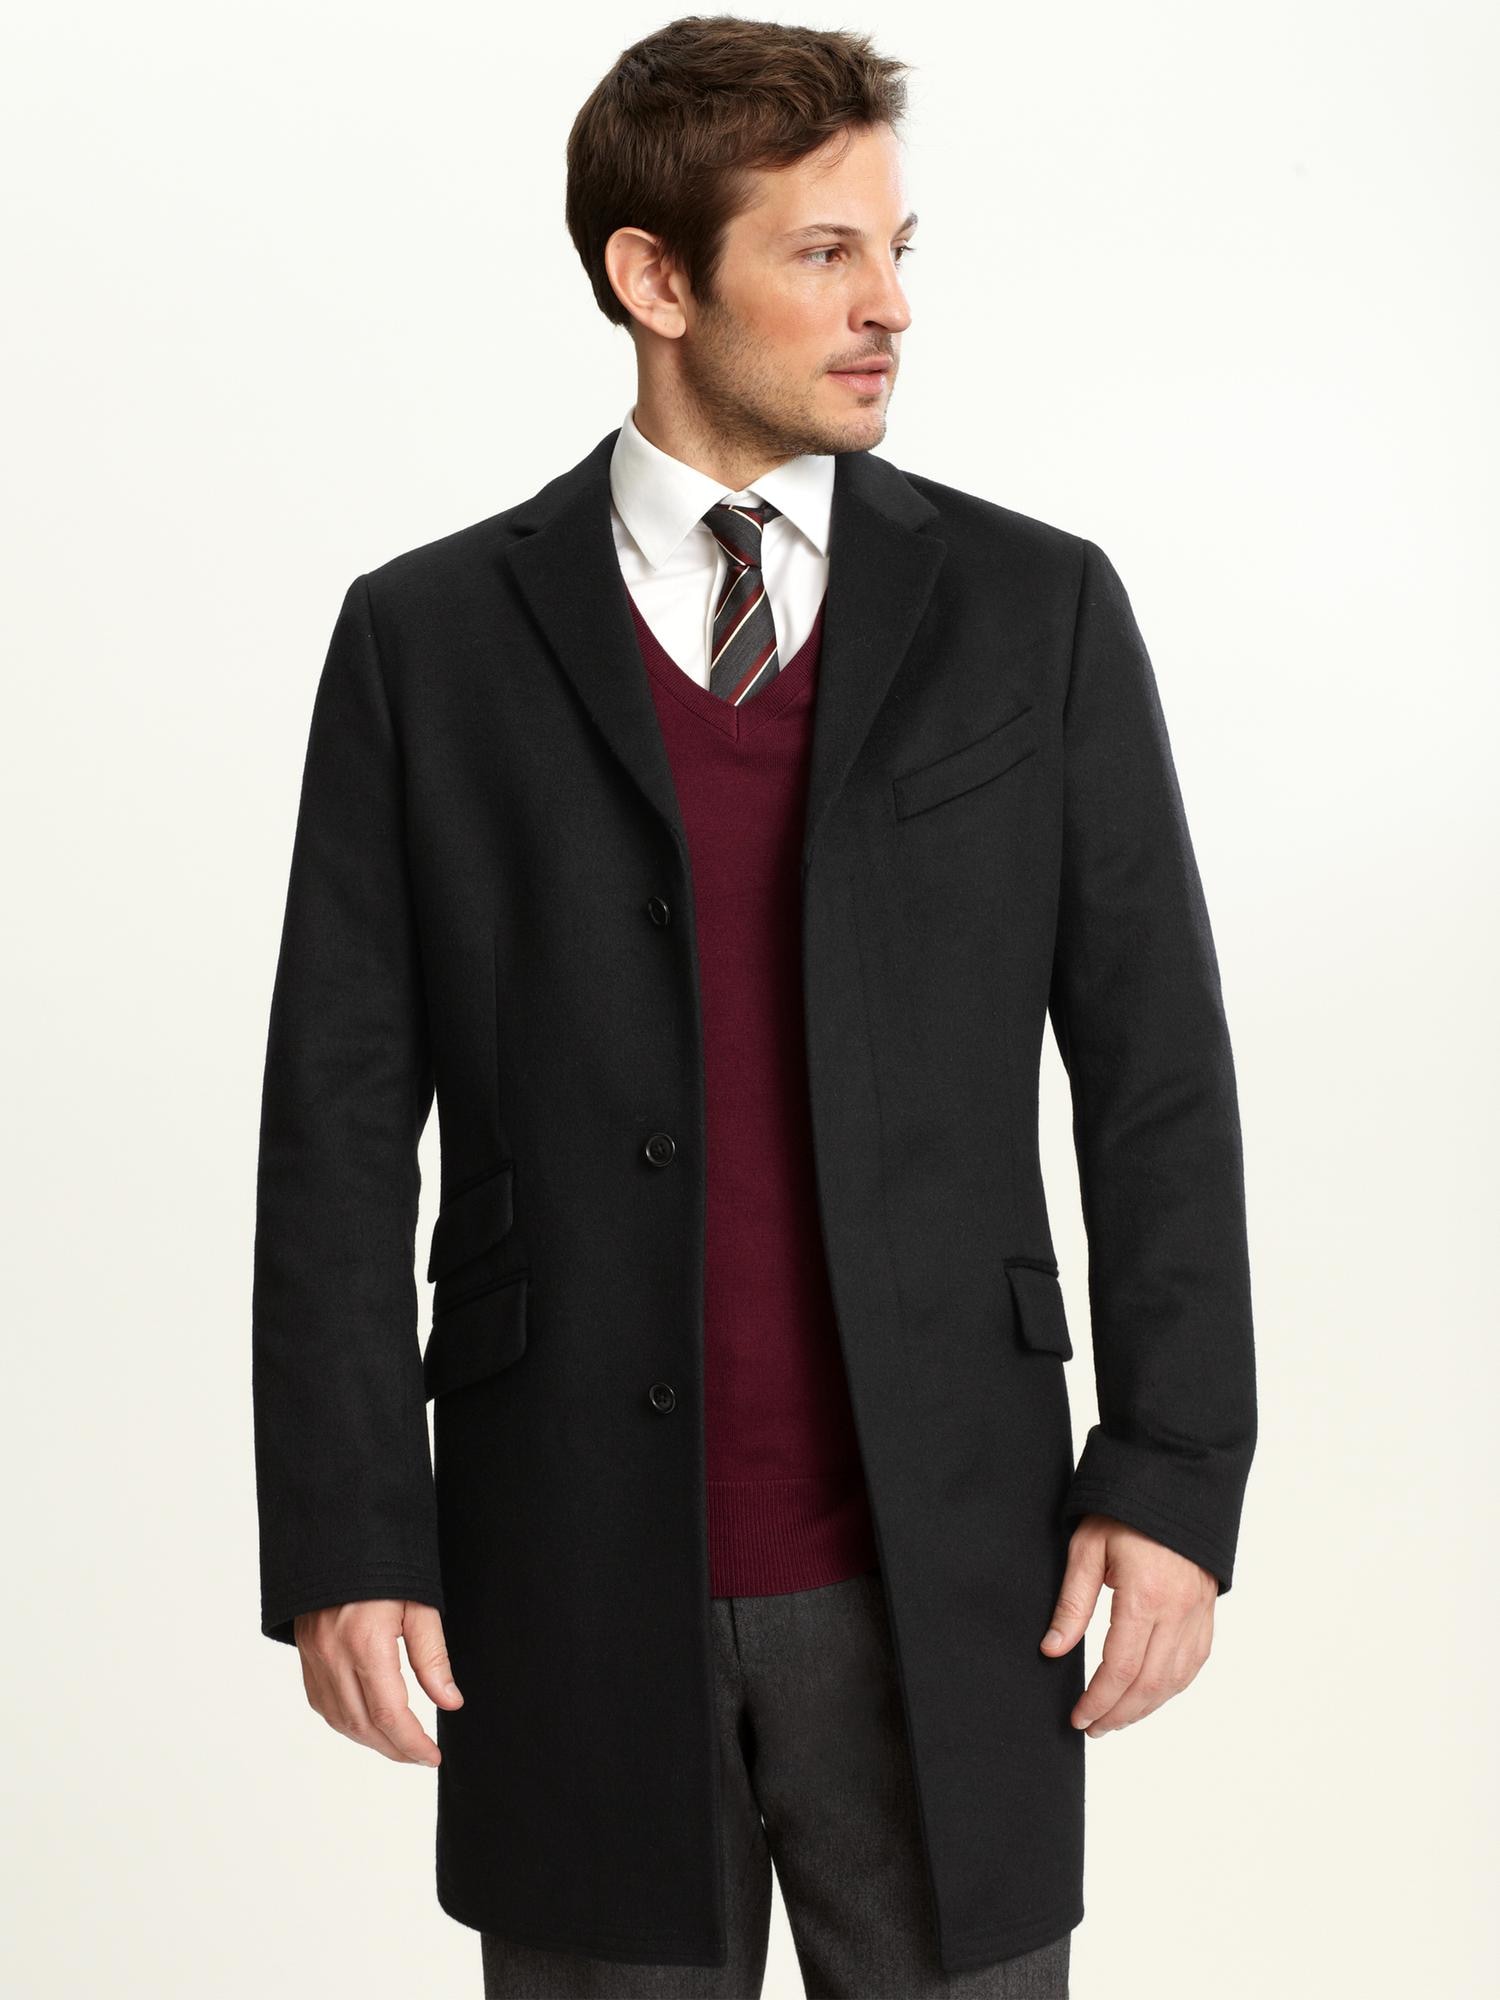 Black wool top coat